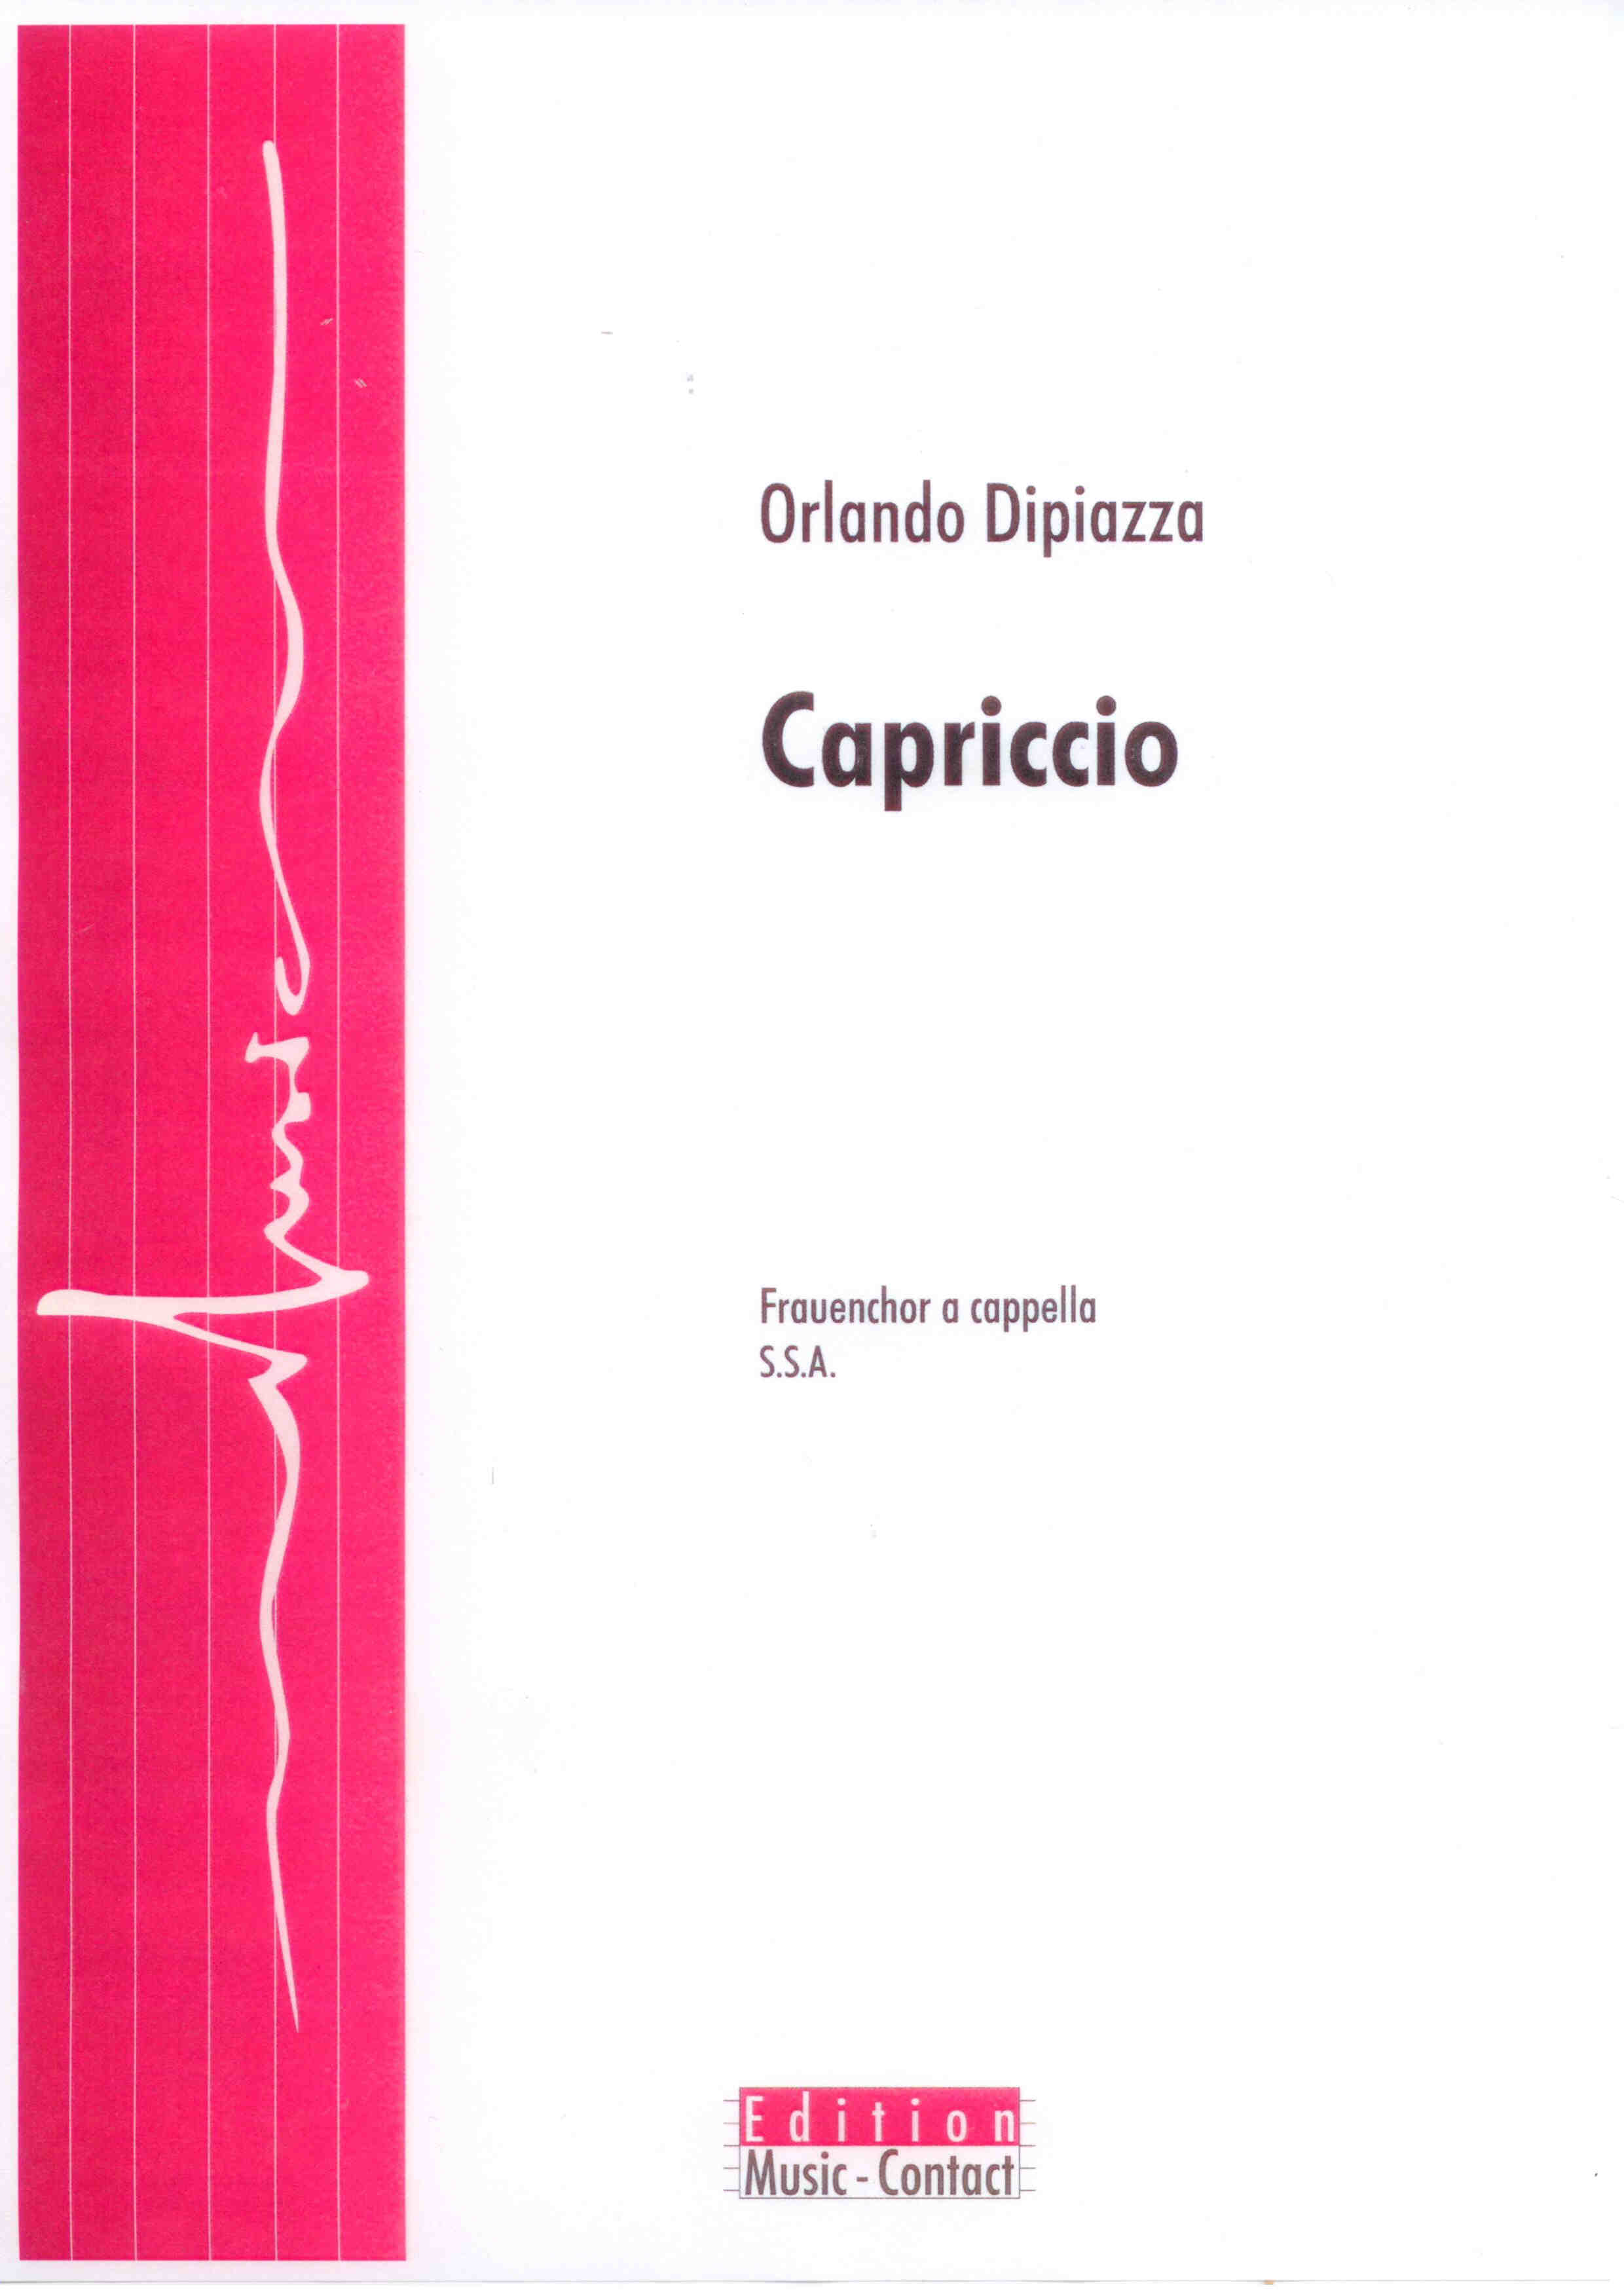 Capriccio - Show sample score